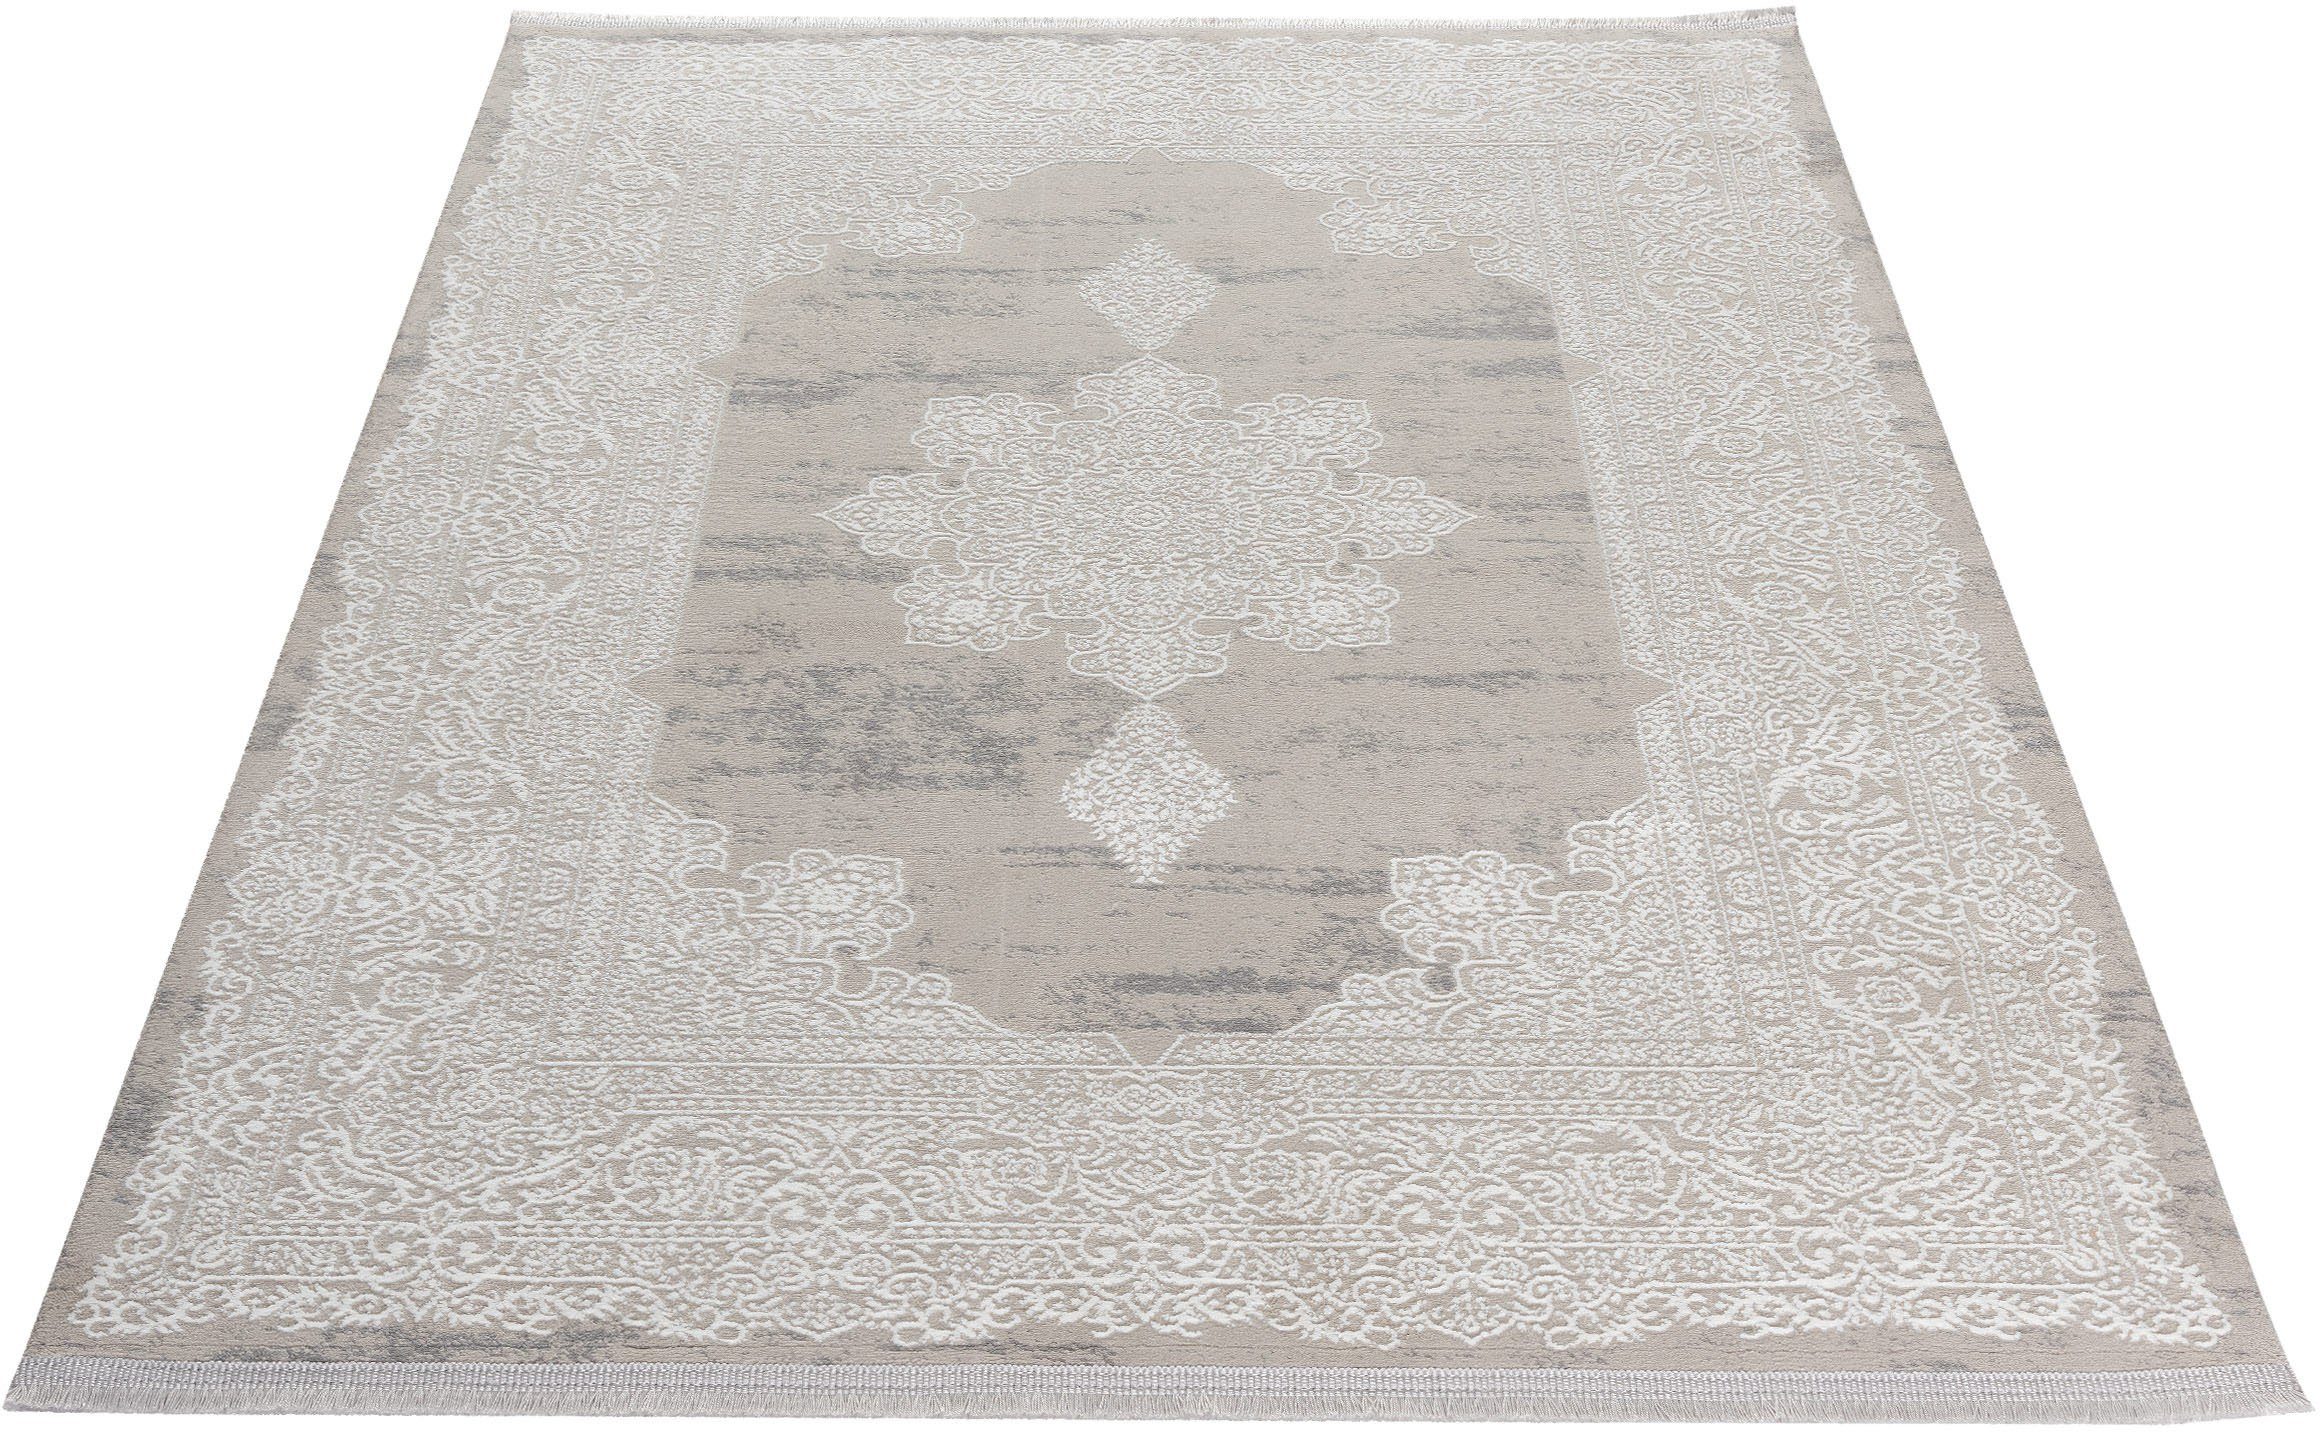 Vintage Sehrazat, Teppich Glory rechteckig, waschbar Teppich, Flachgewebe mm, Look, 10 250, Höhe: